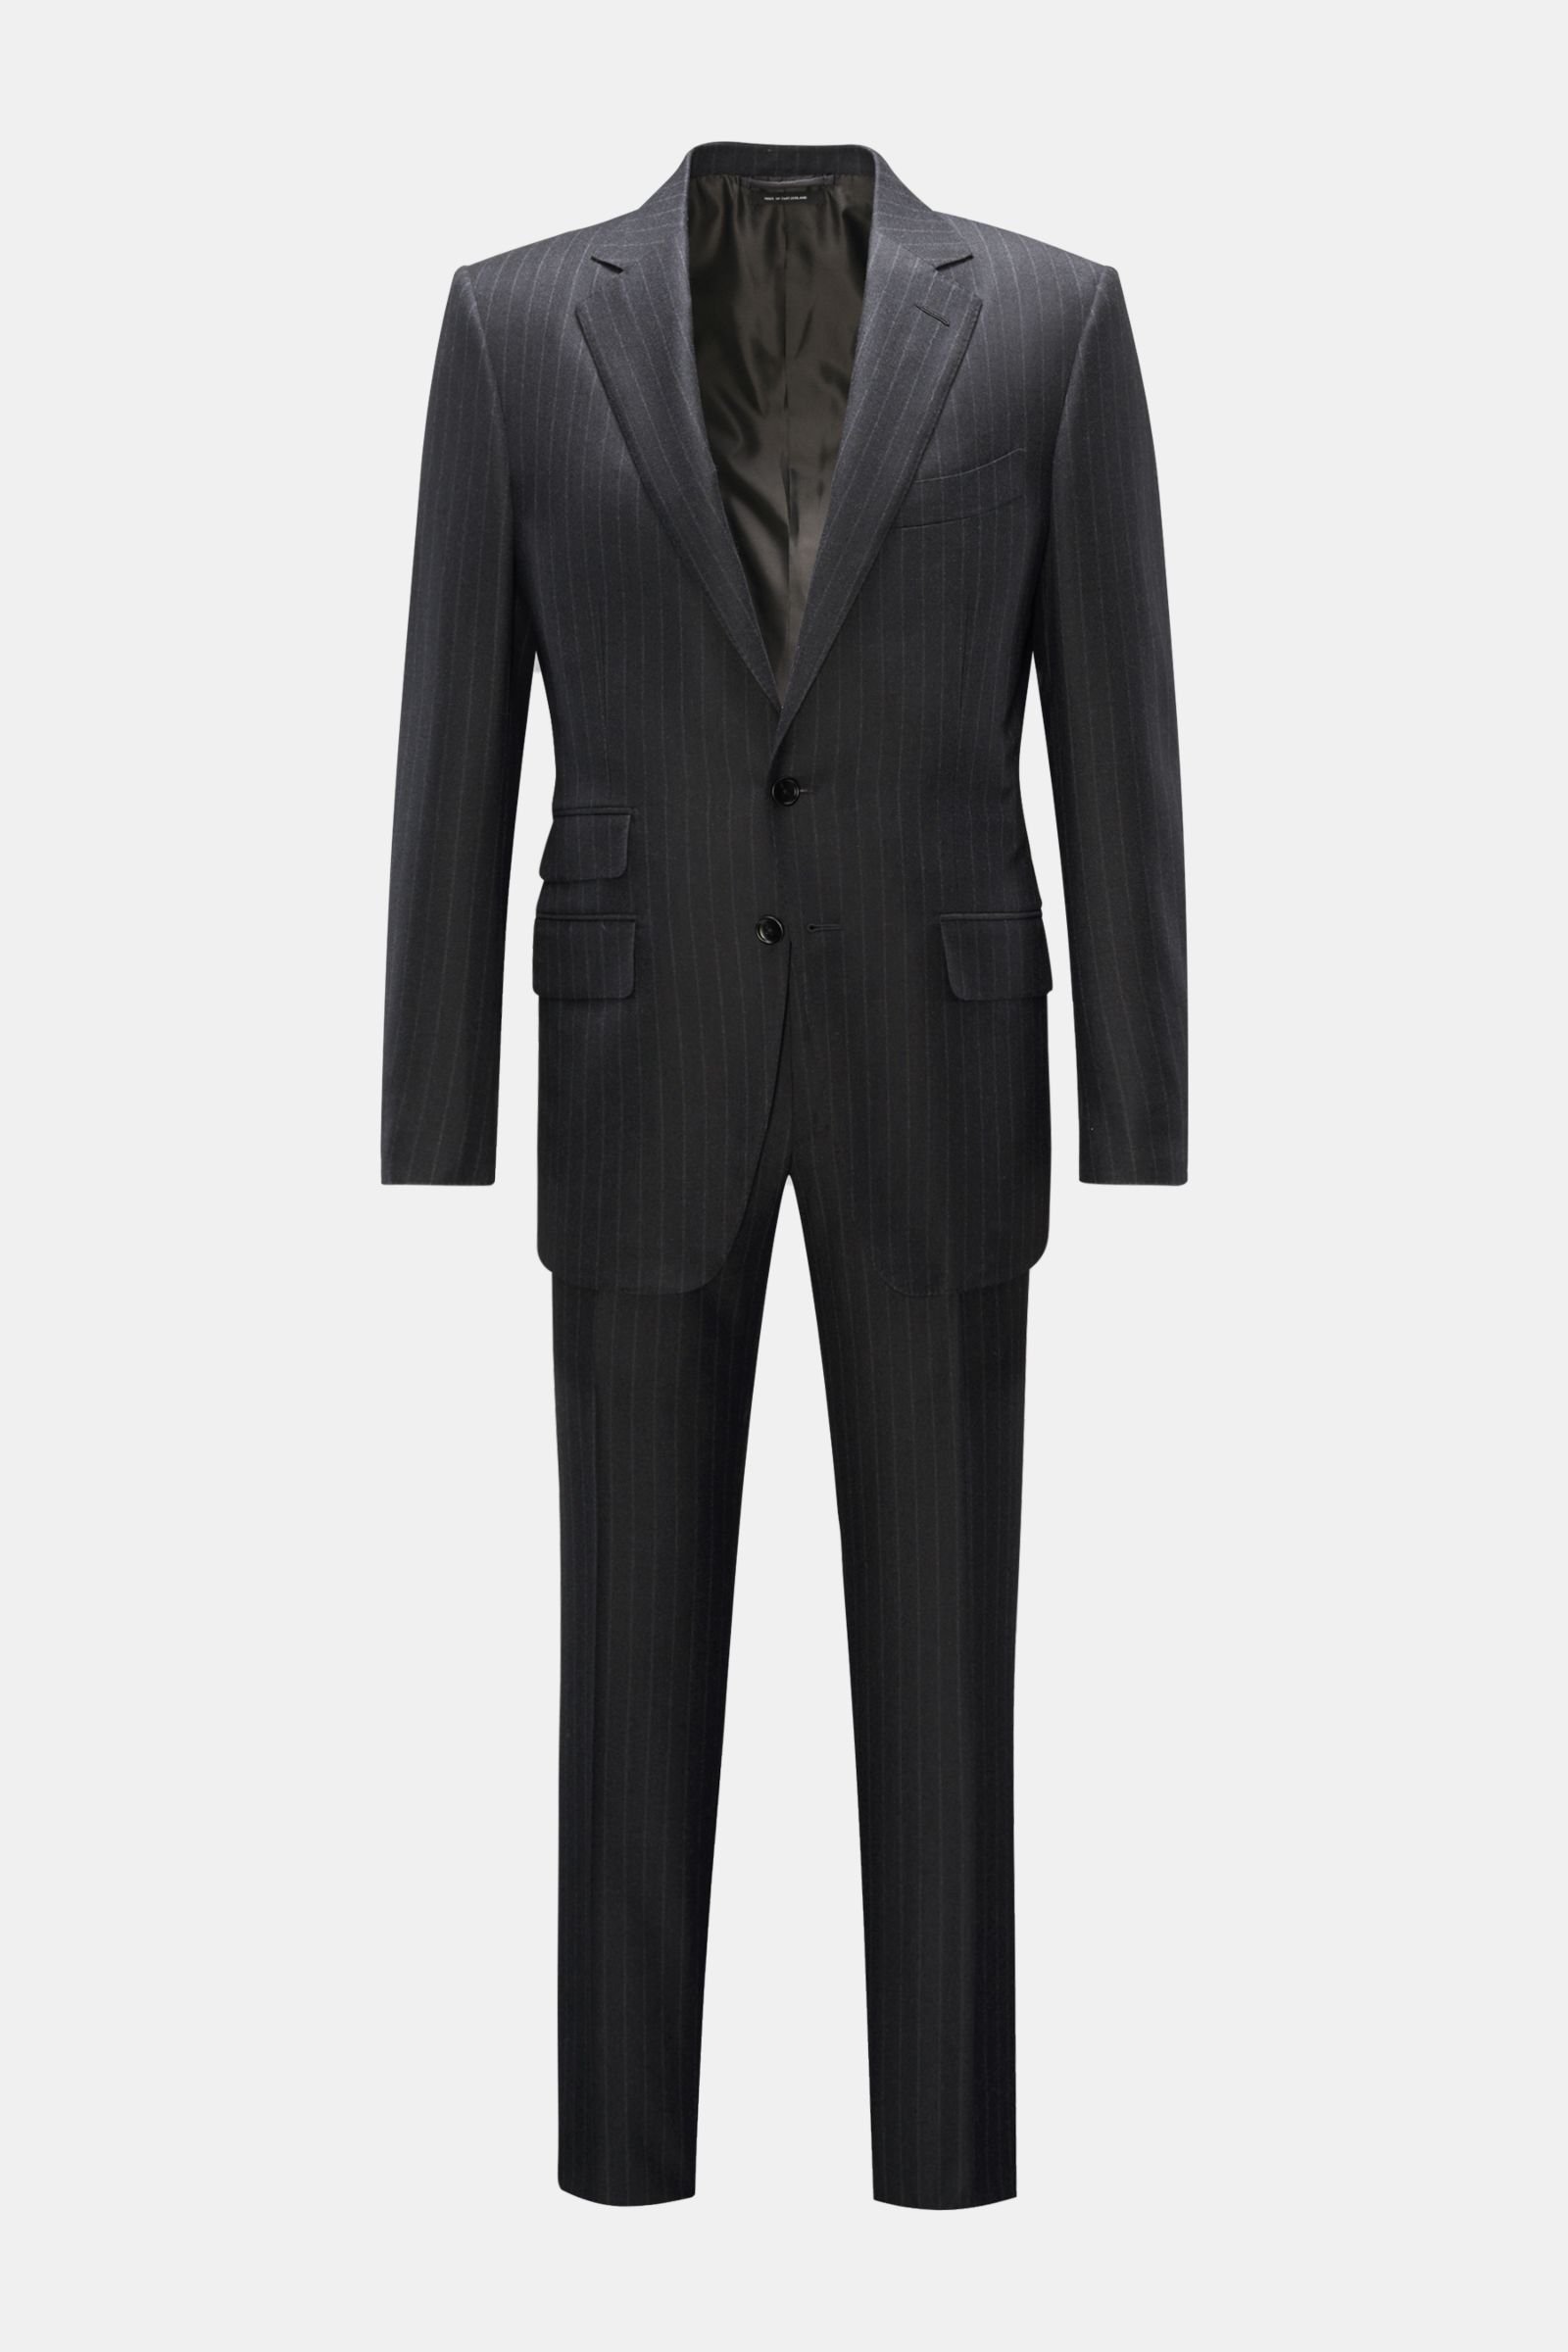 TOM FORD suit 'O'Connor' anthracite/grey striped | BRAUN Hamburg